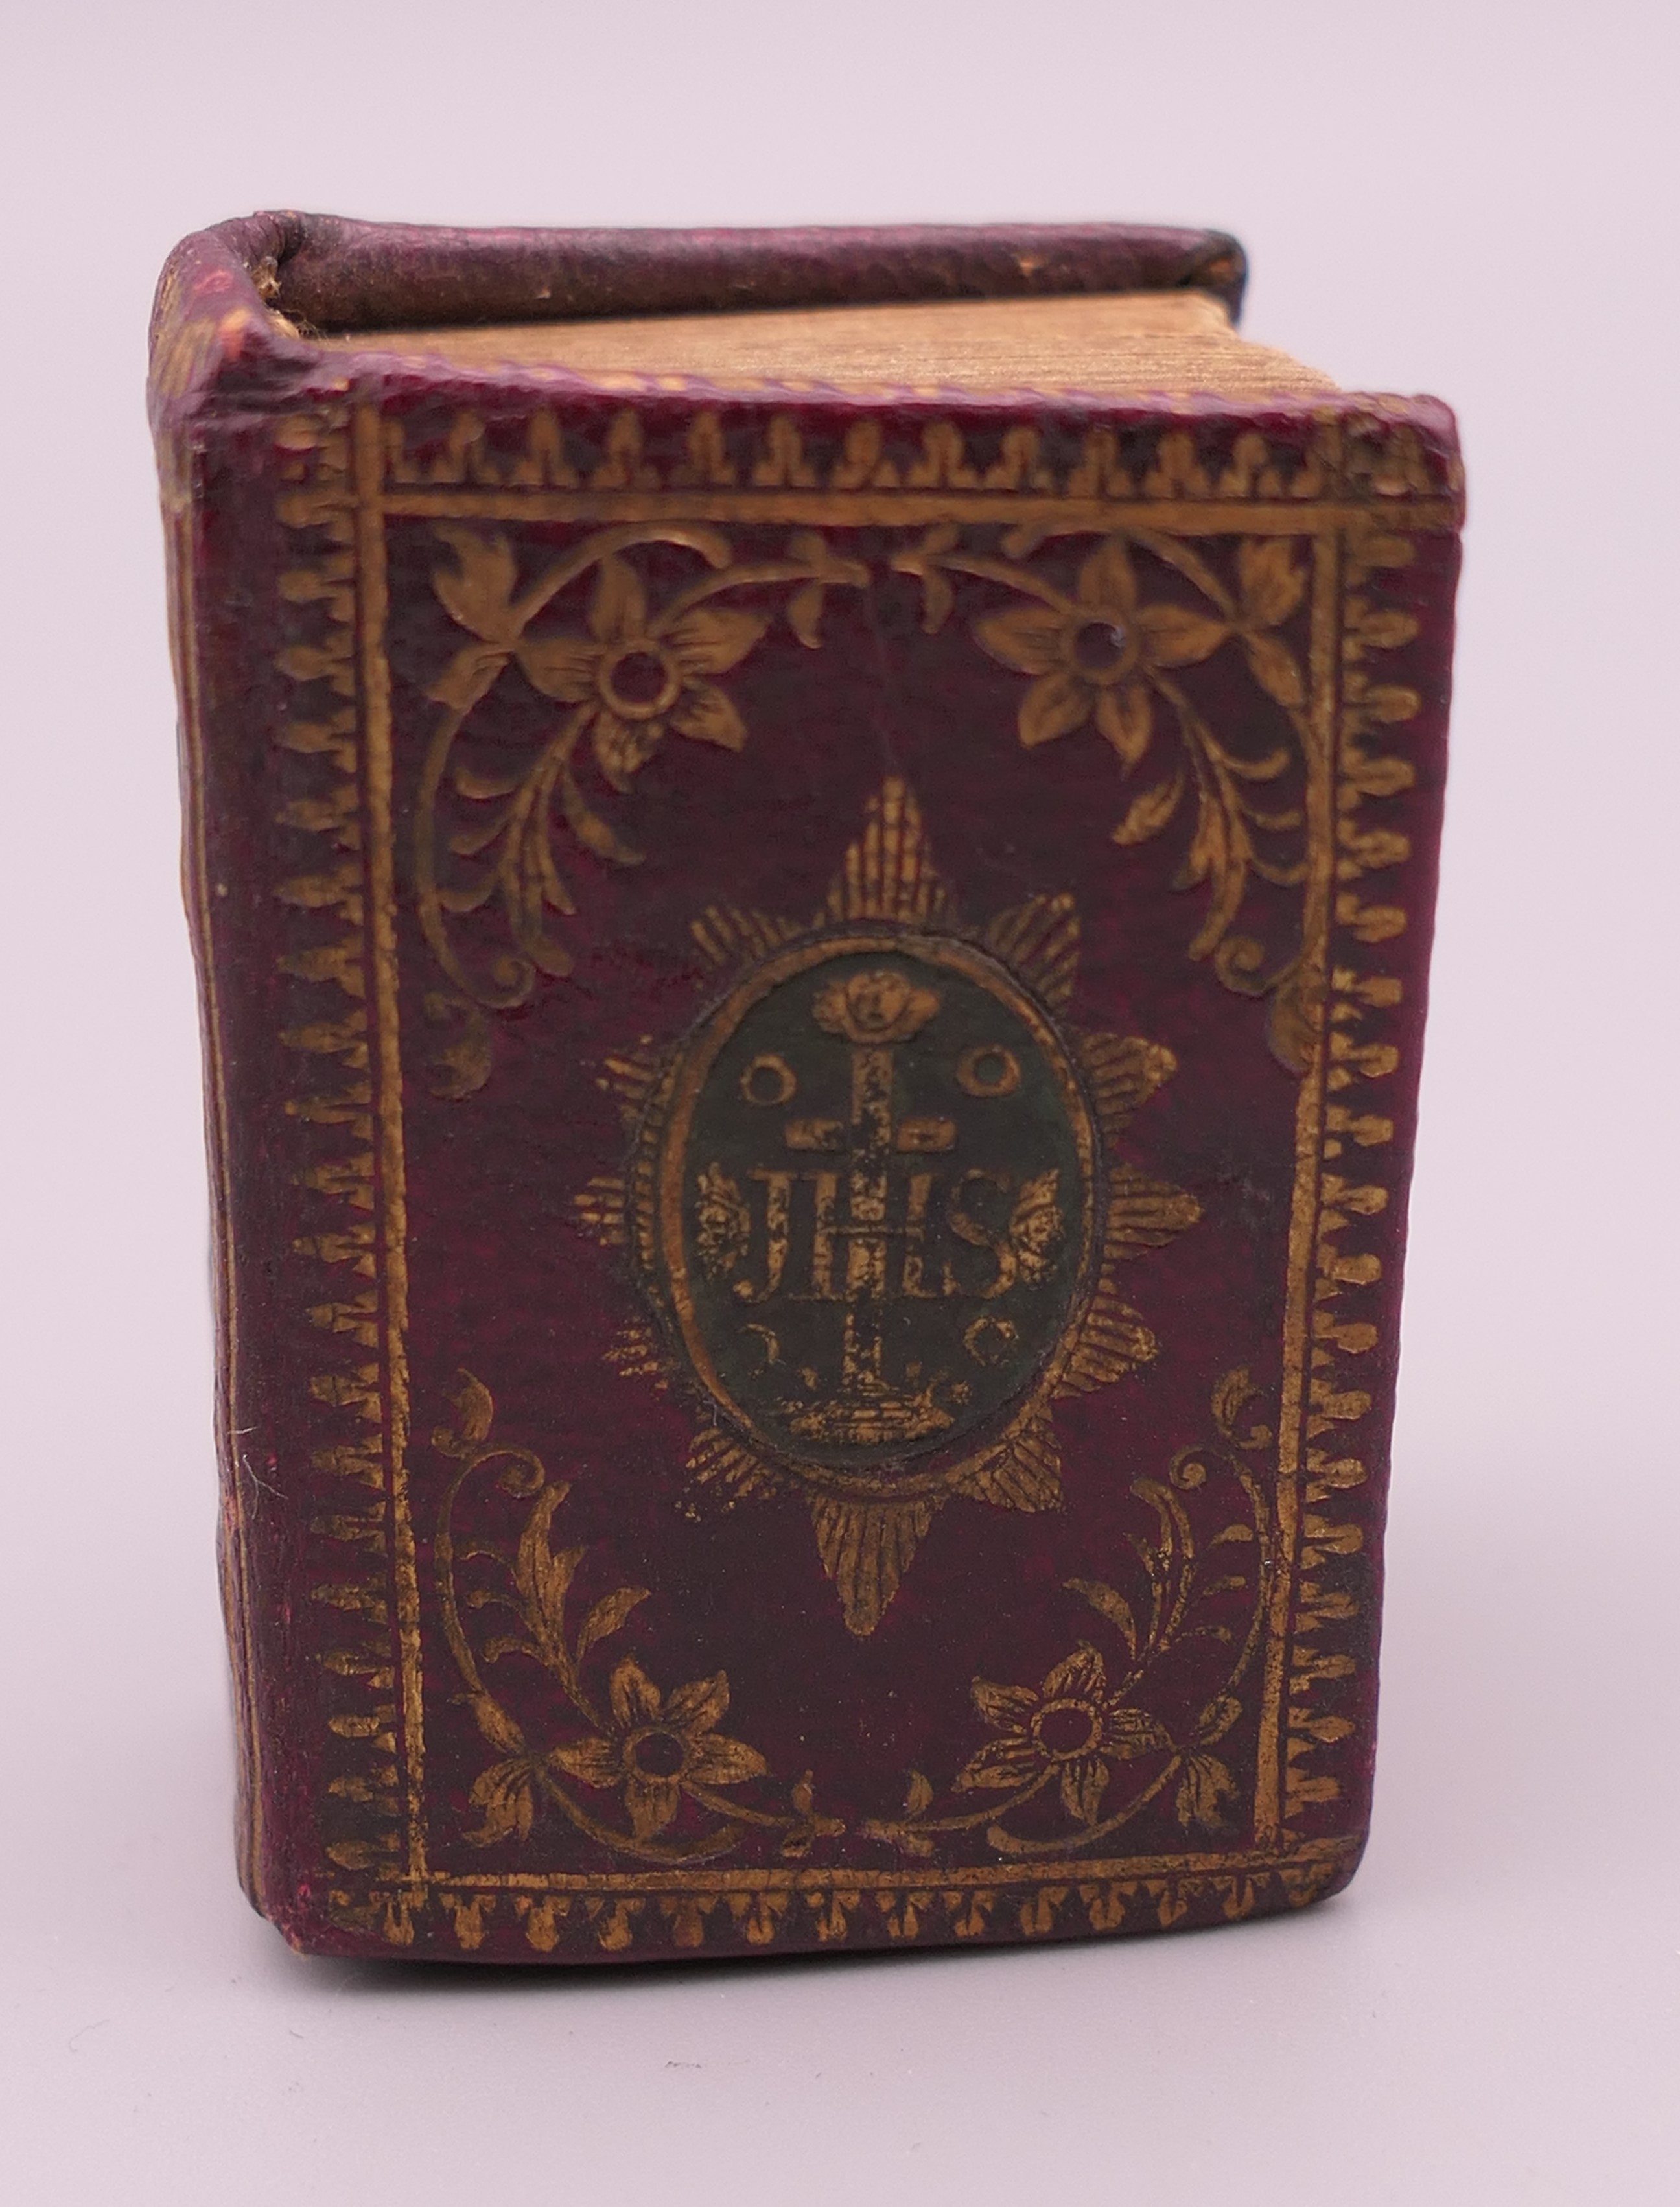 A 1786 miniature Bible. 3 cm wide.